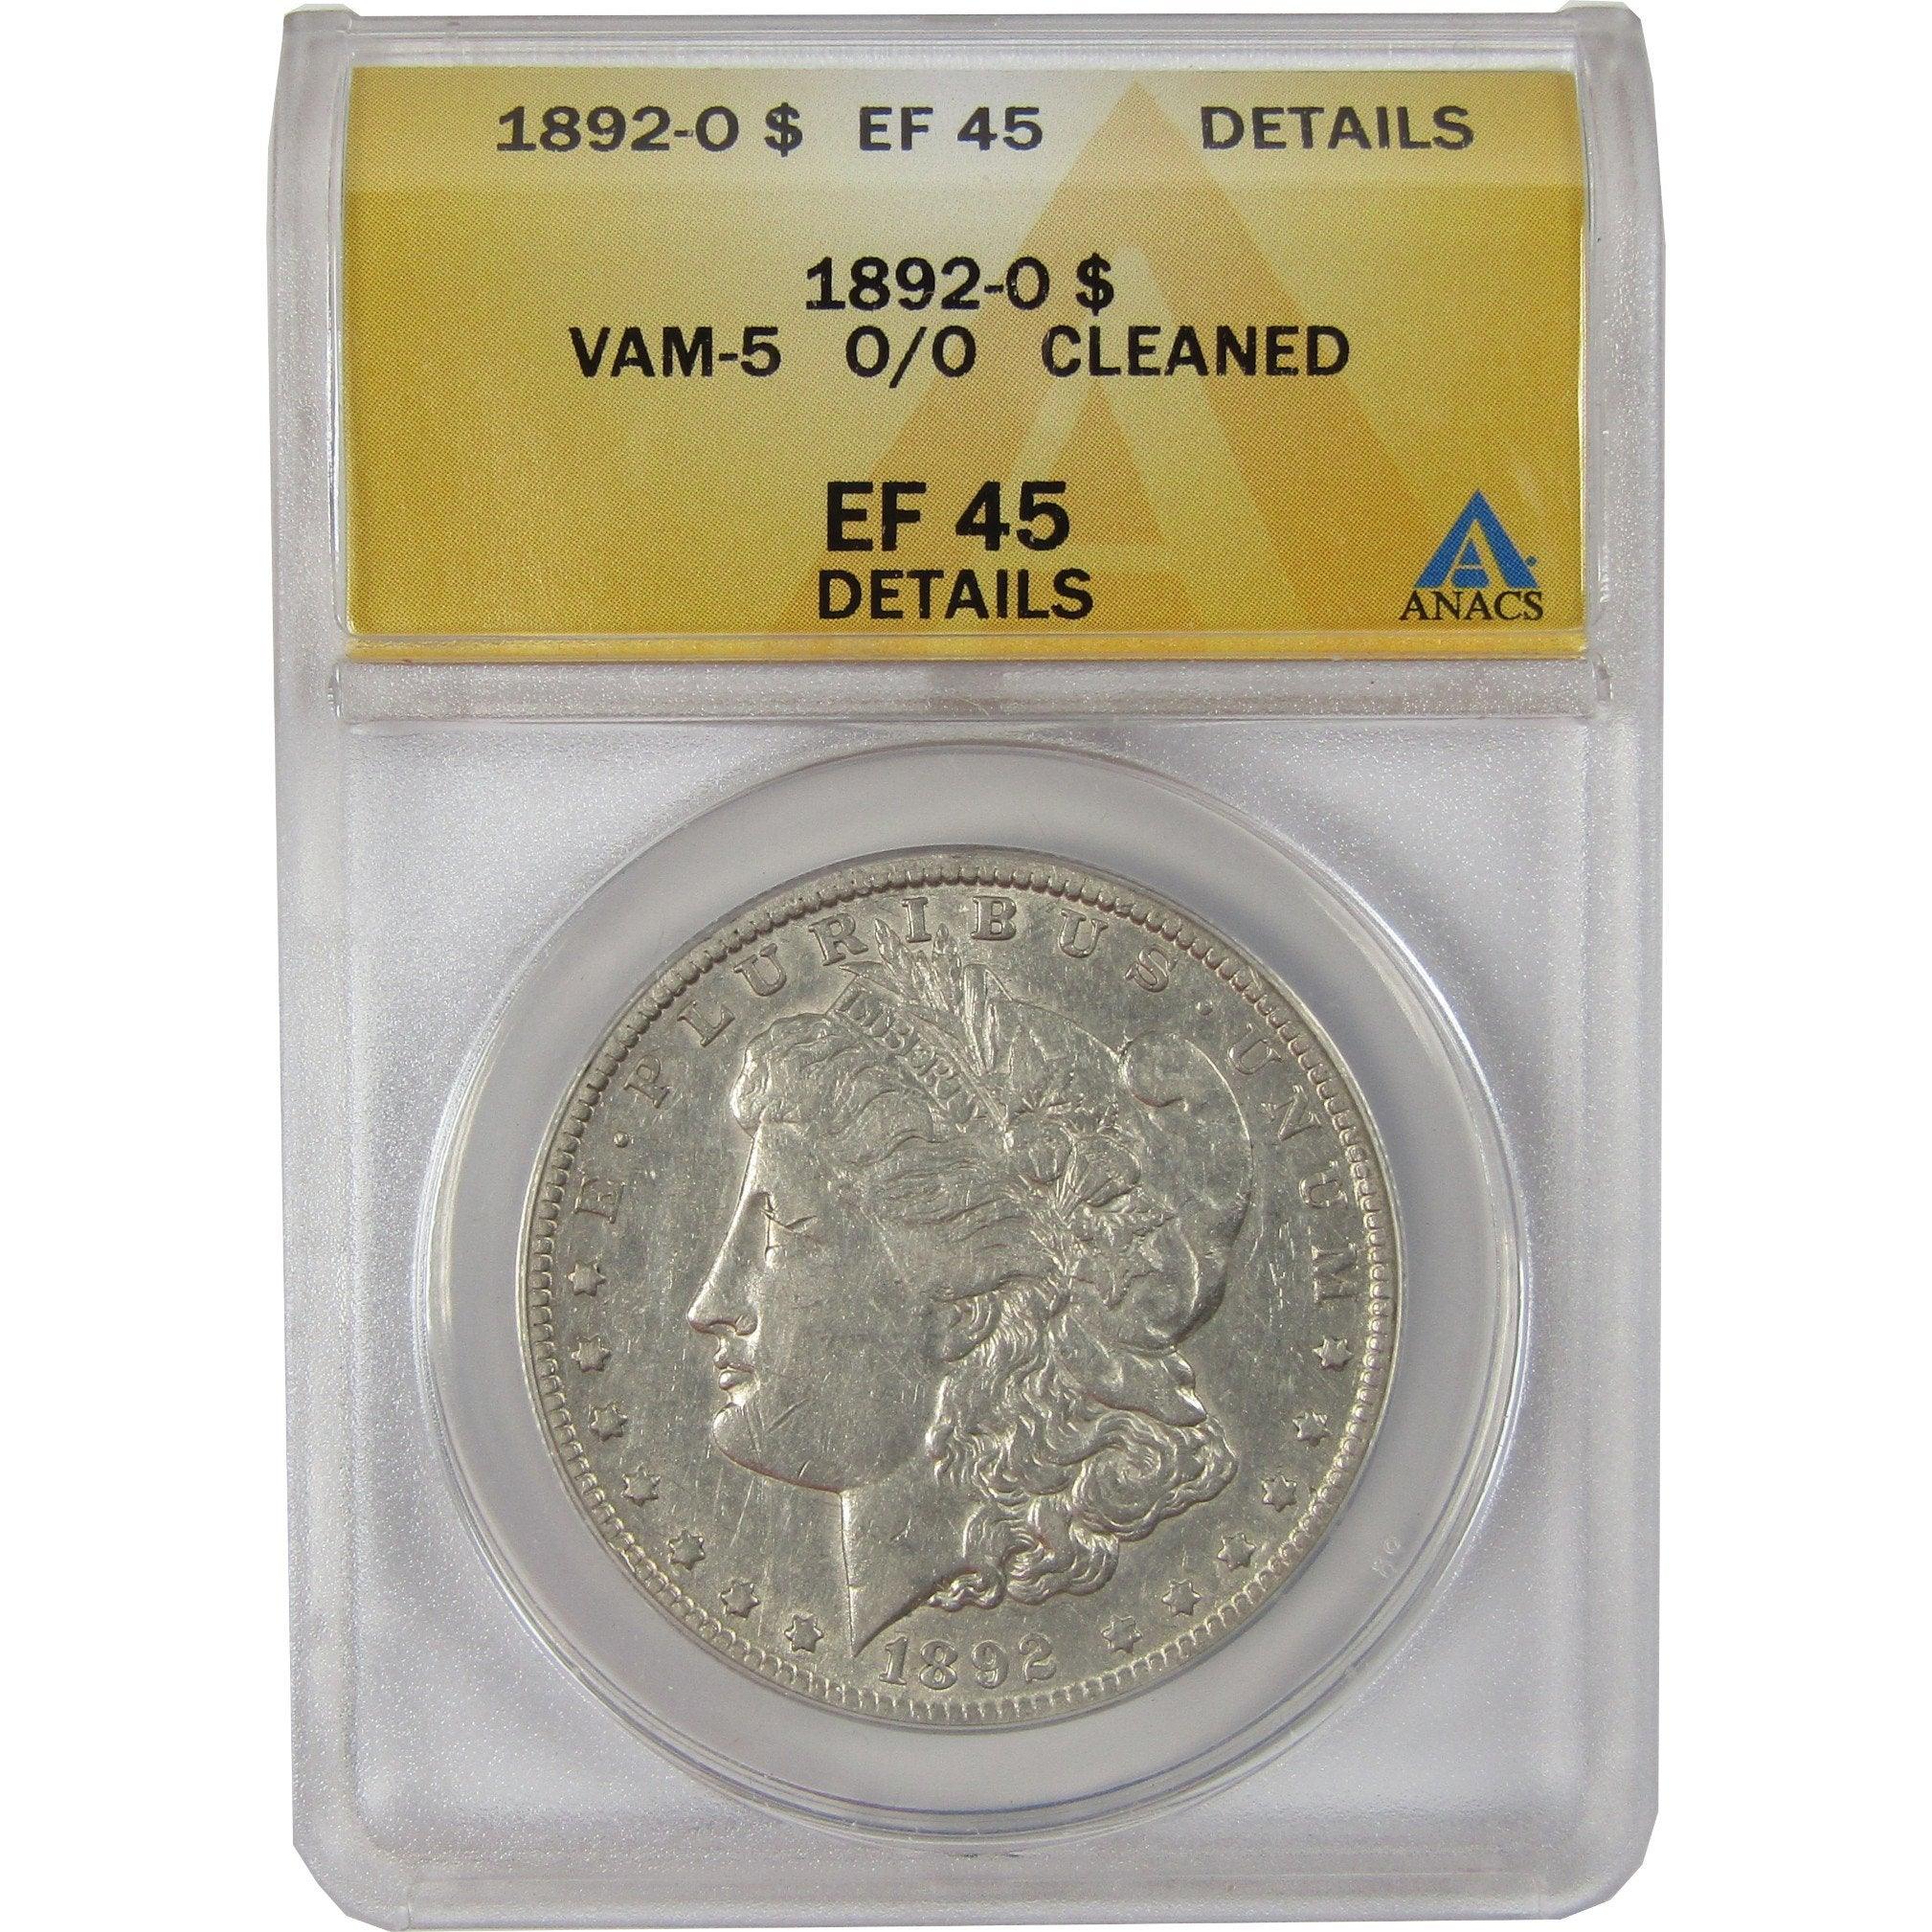 1892 O/O VAM 5 Morgan Dollar EF 45 Details ANACS Silver SKU:CPC1124 - Morgan coin - Morgan silver dollar - Morgan silver dollar for sale - Profile Coins &amp; Collectibles